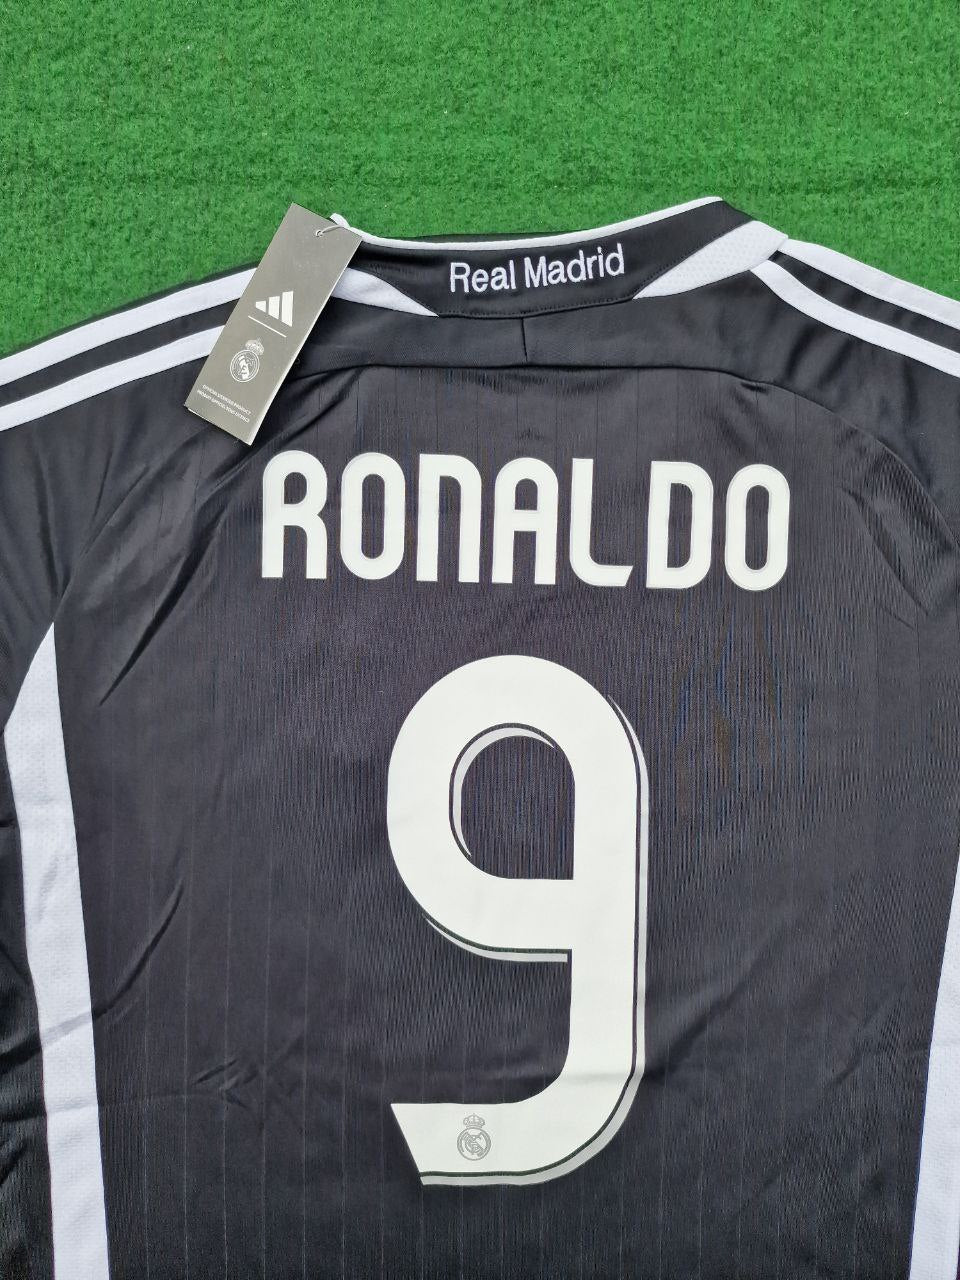 Ronaldo Nazario Real Madrid Black Retro Football Jersey